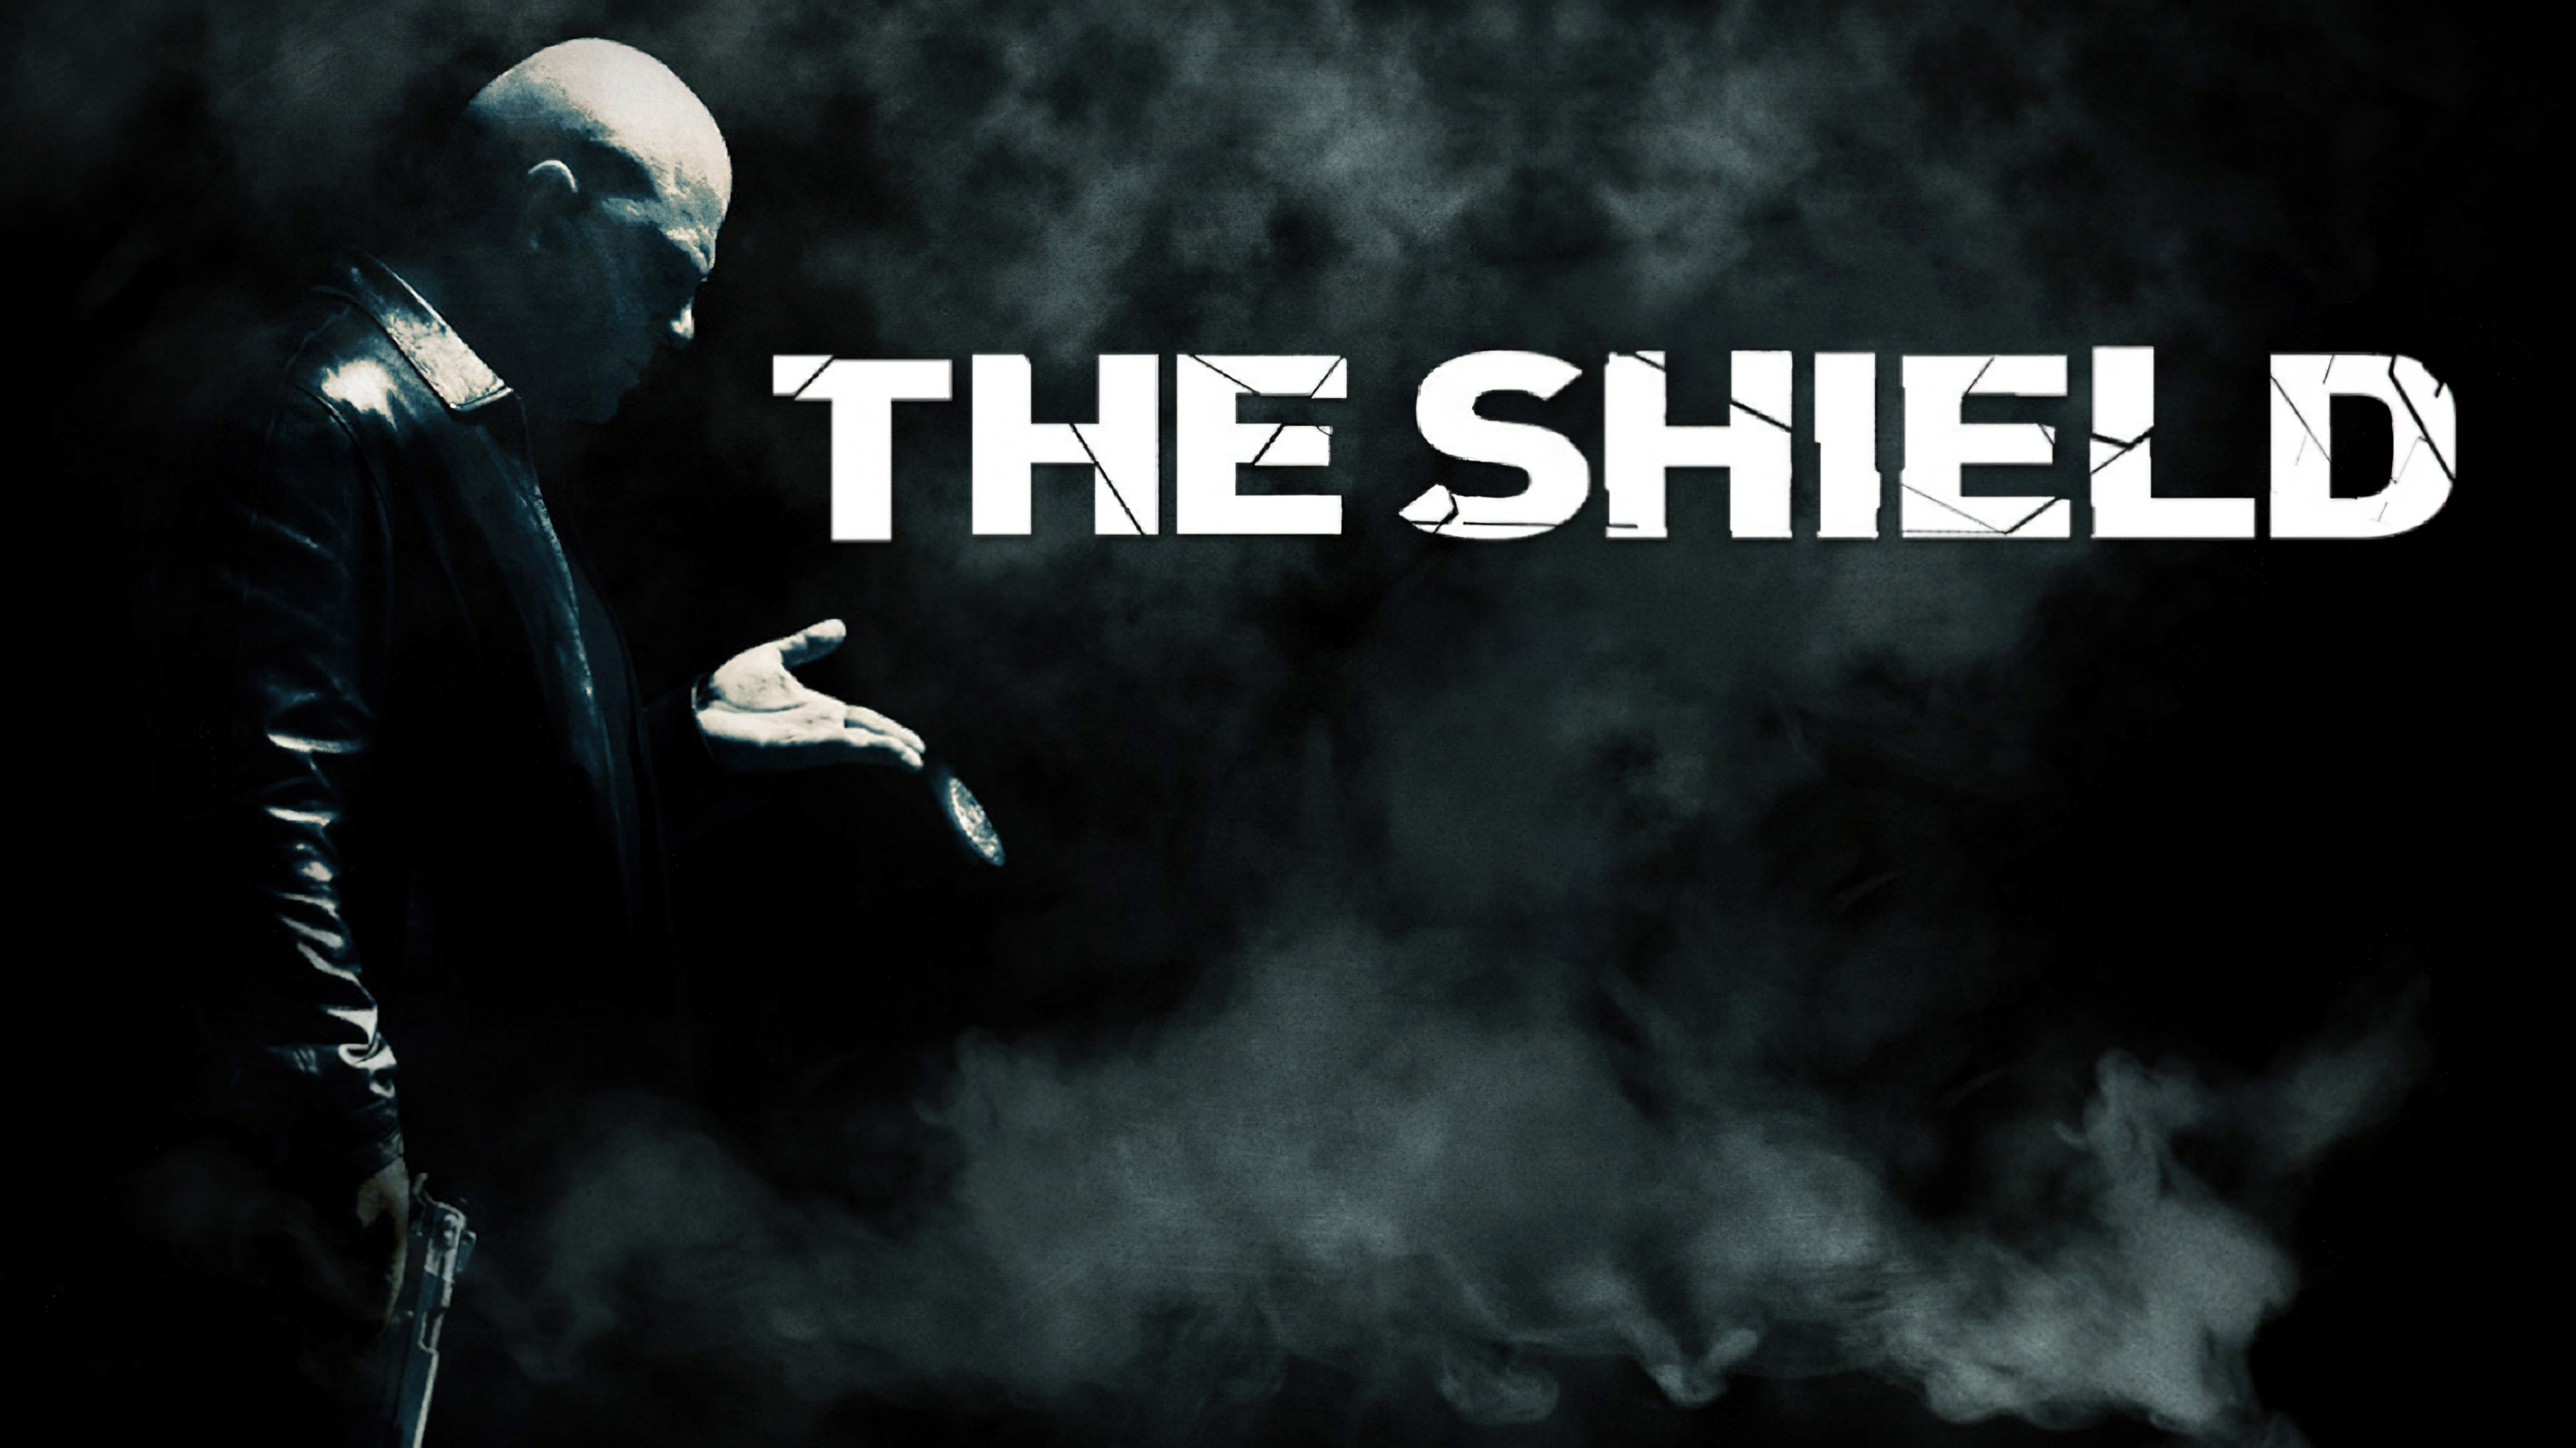 The Shield Season 7 (2008) [ไม่มีซับไทย]